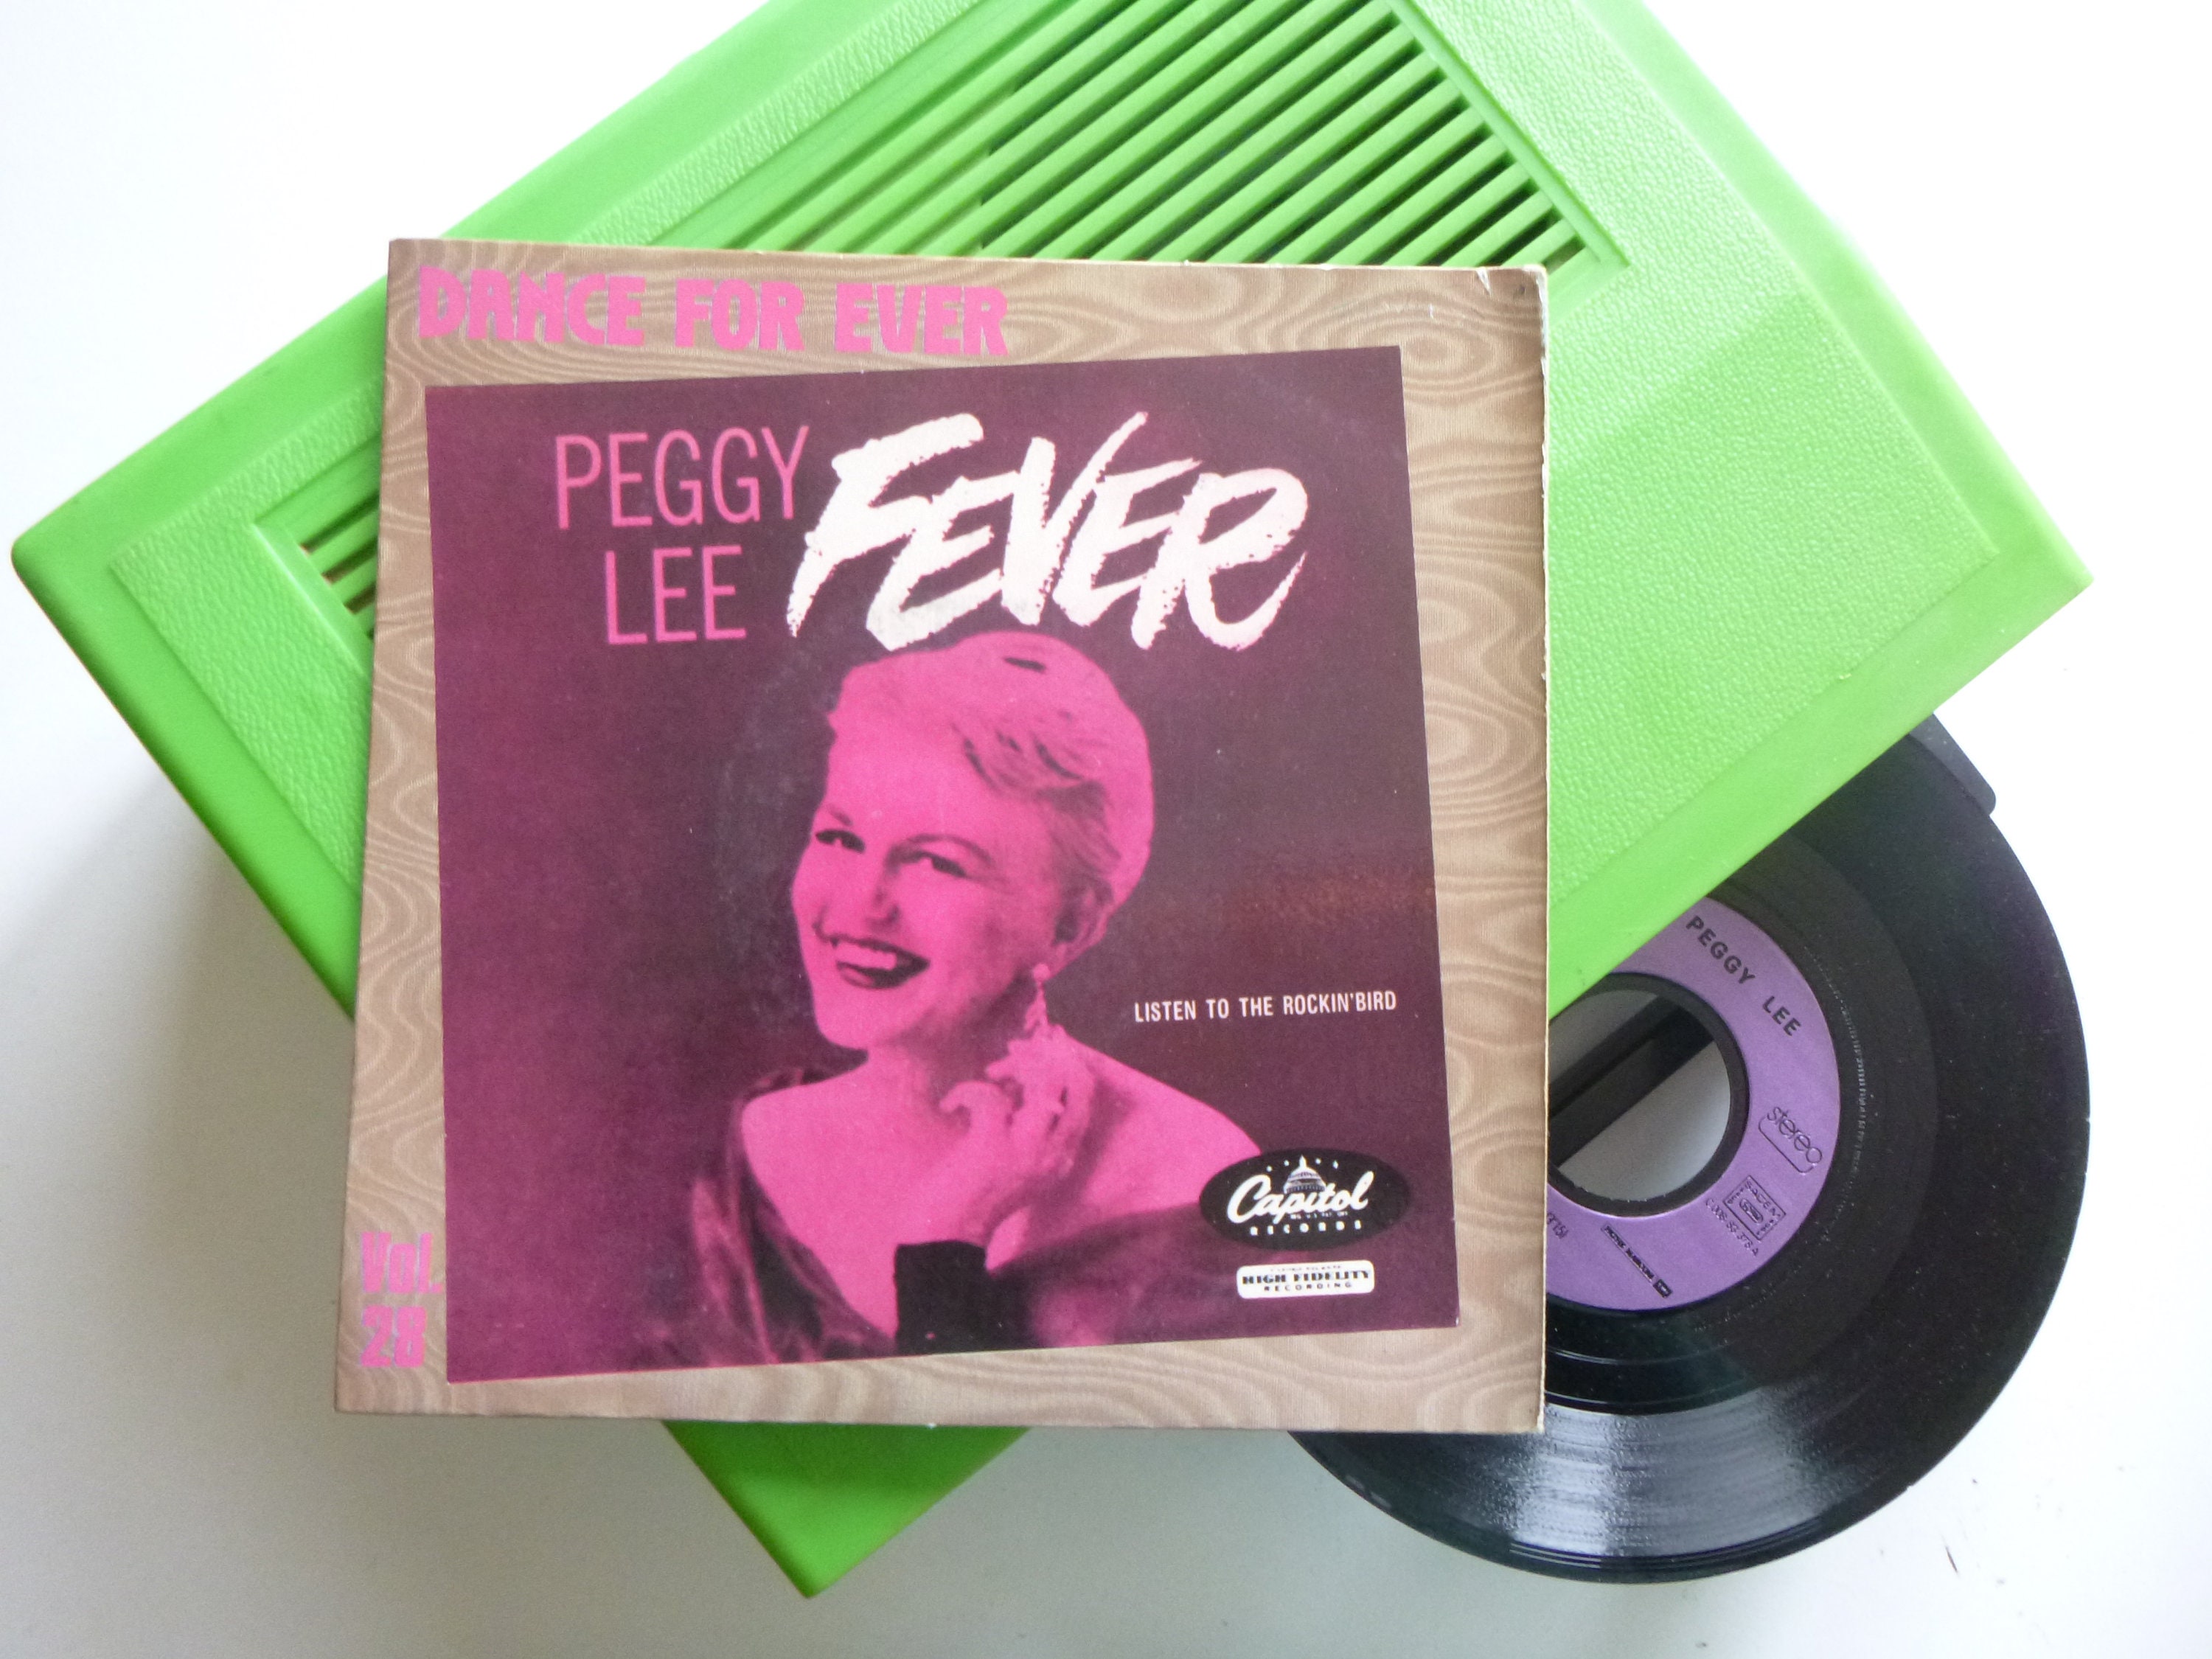 Peggy Lee Fever Original Record 7' Vinyl 45T - Etsy Australia